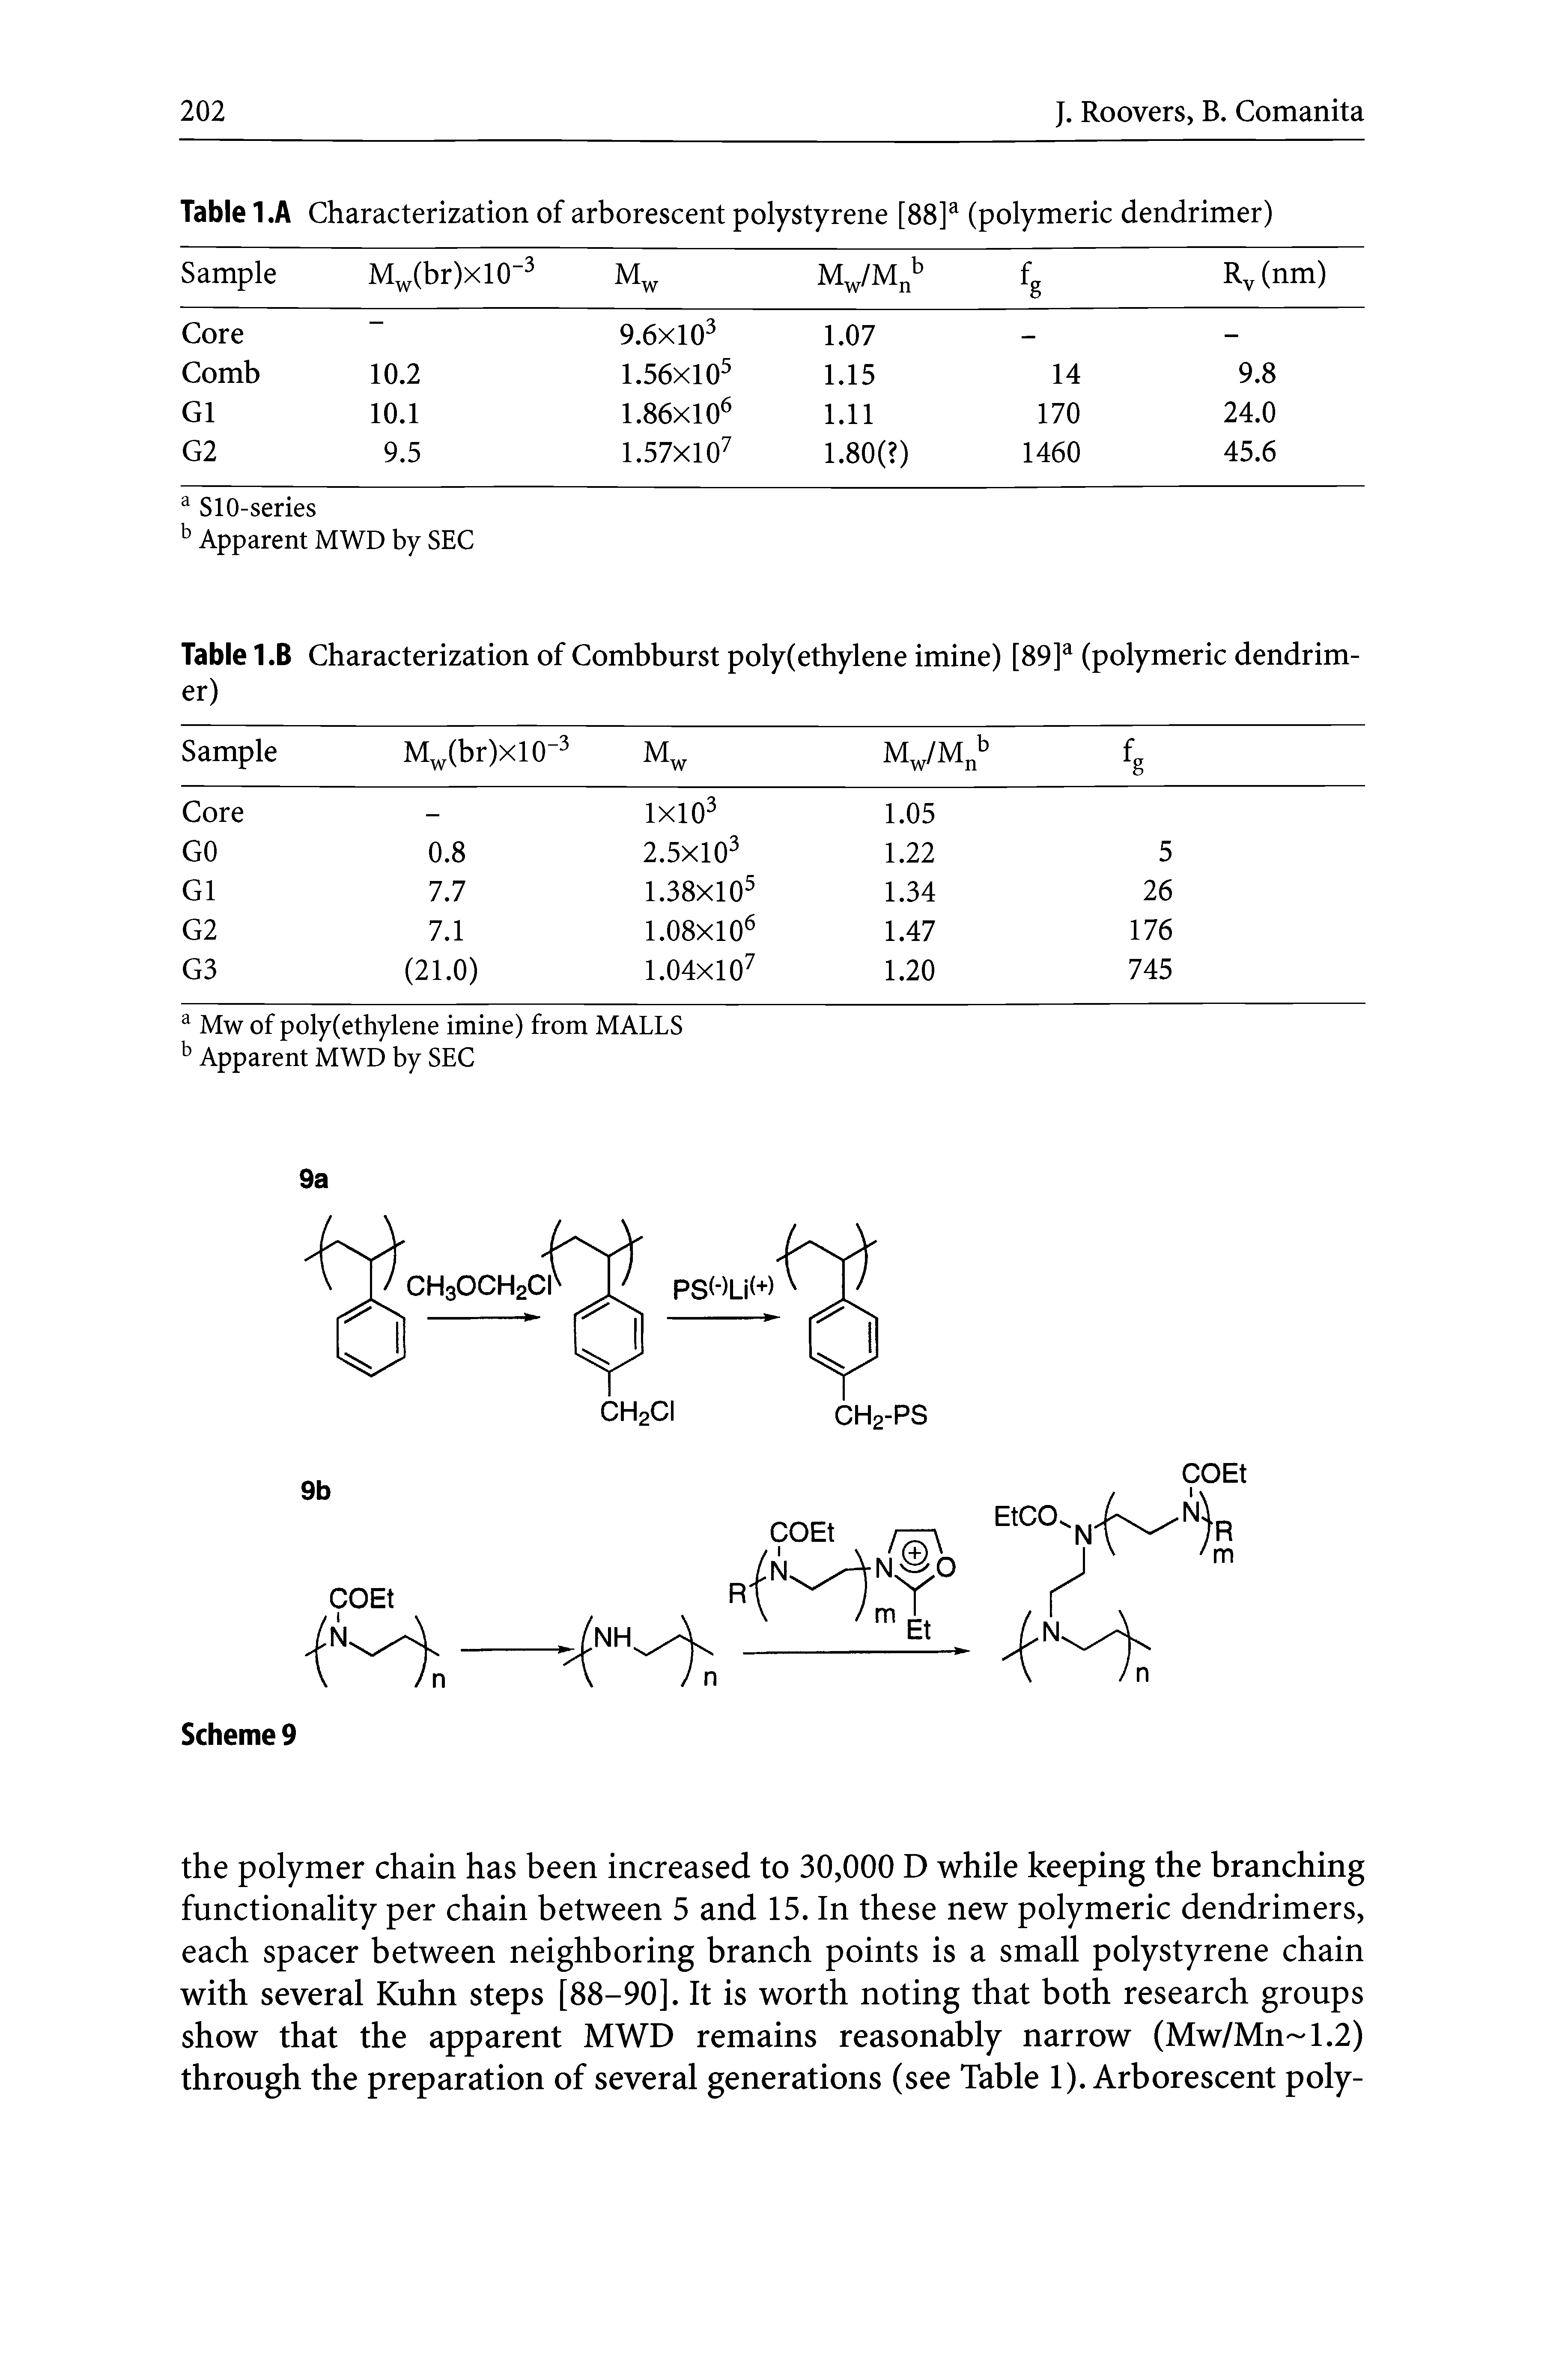 Table 1.B Characterization of Combburst poly(ethylene imine) [89]a (polymeric dendrimer)...